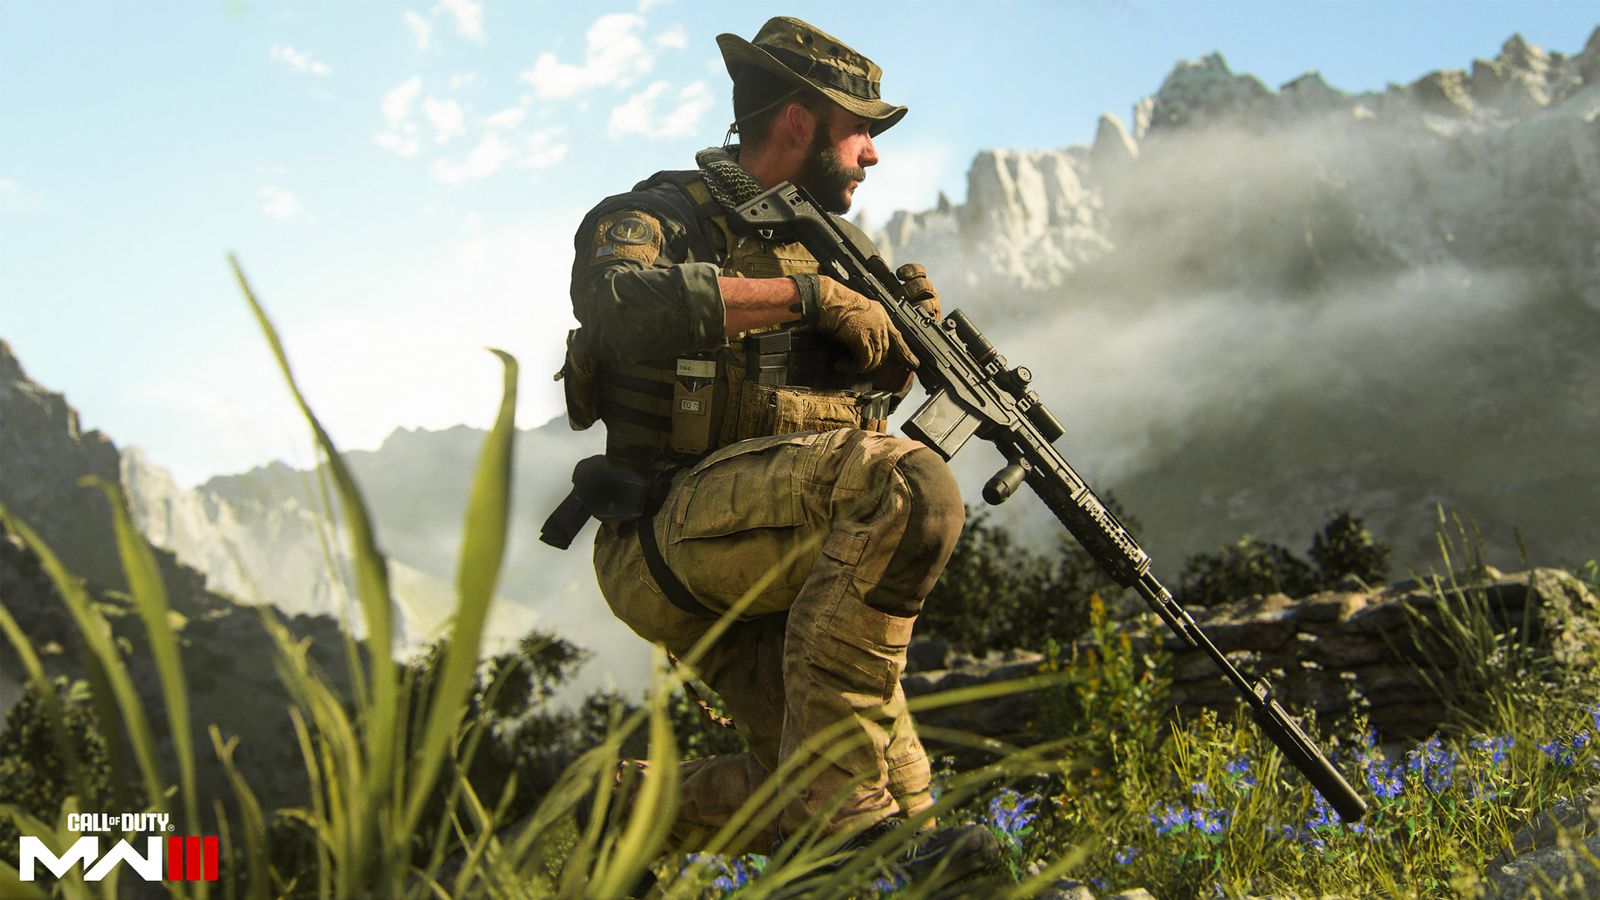 Modern Warfare 3 Captain Price kneeling and pointing gun at ground